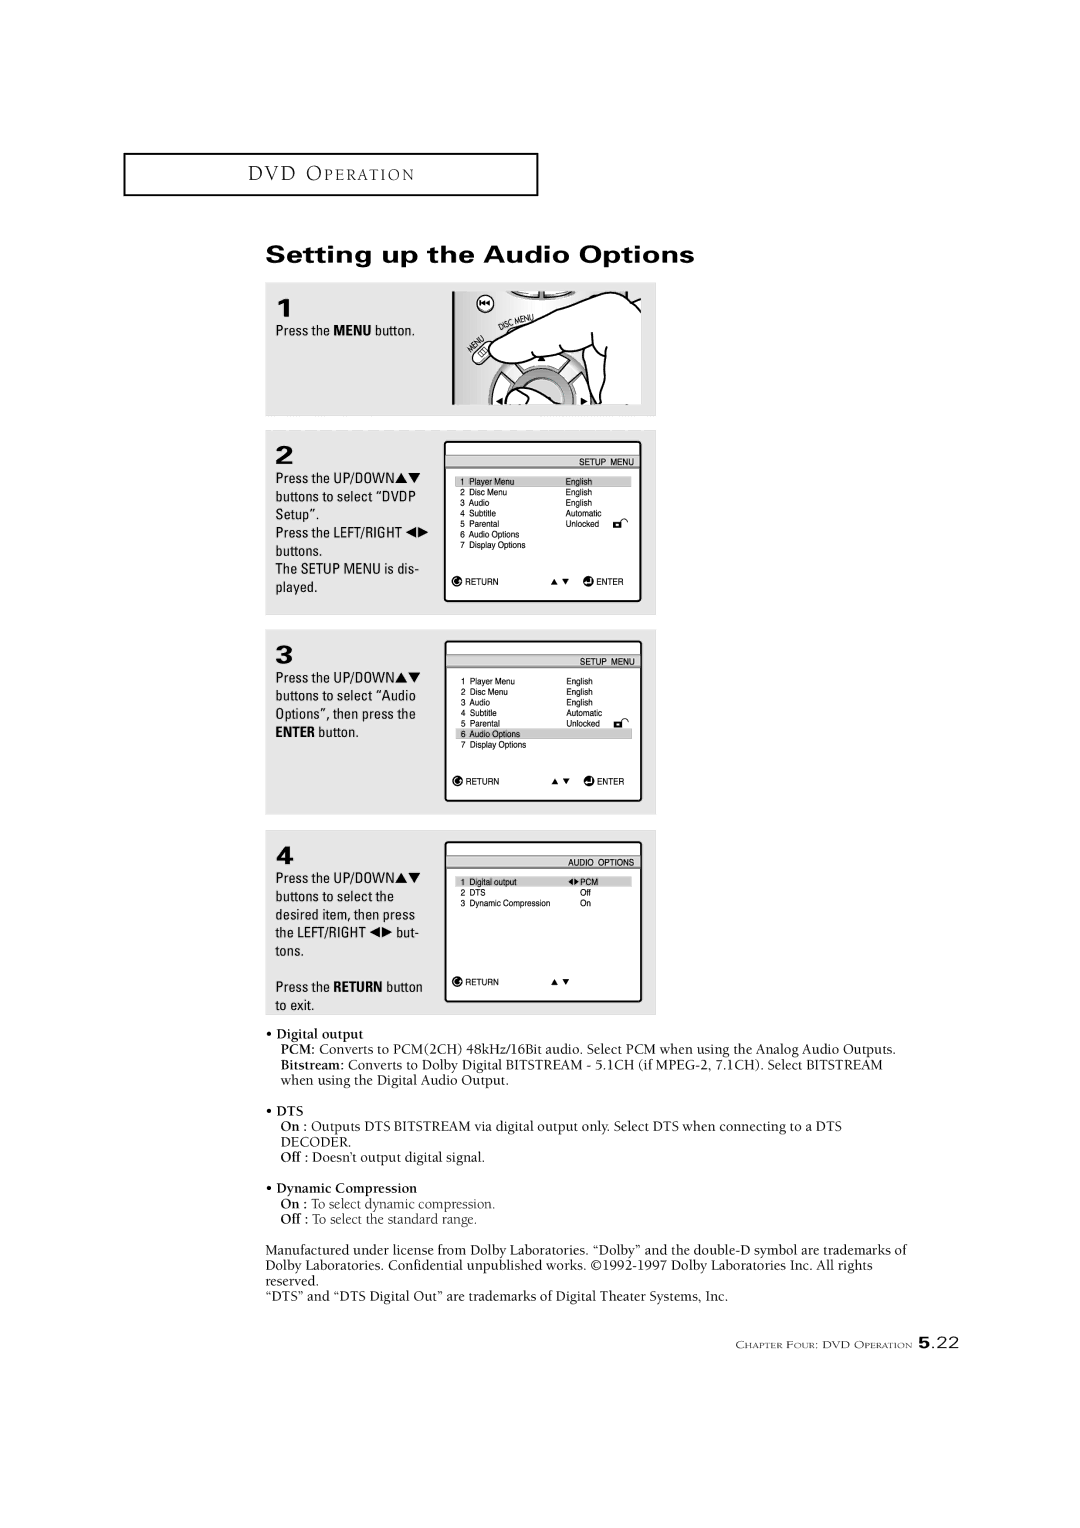 Samsung CSN2077DV manual Setting up the Audio Options, Digital output 